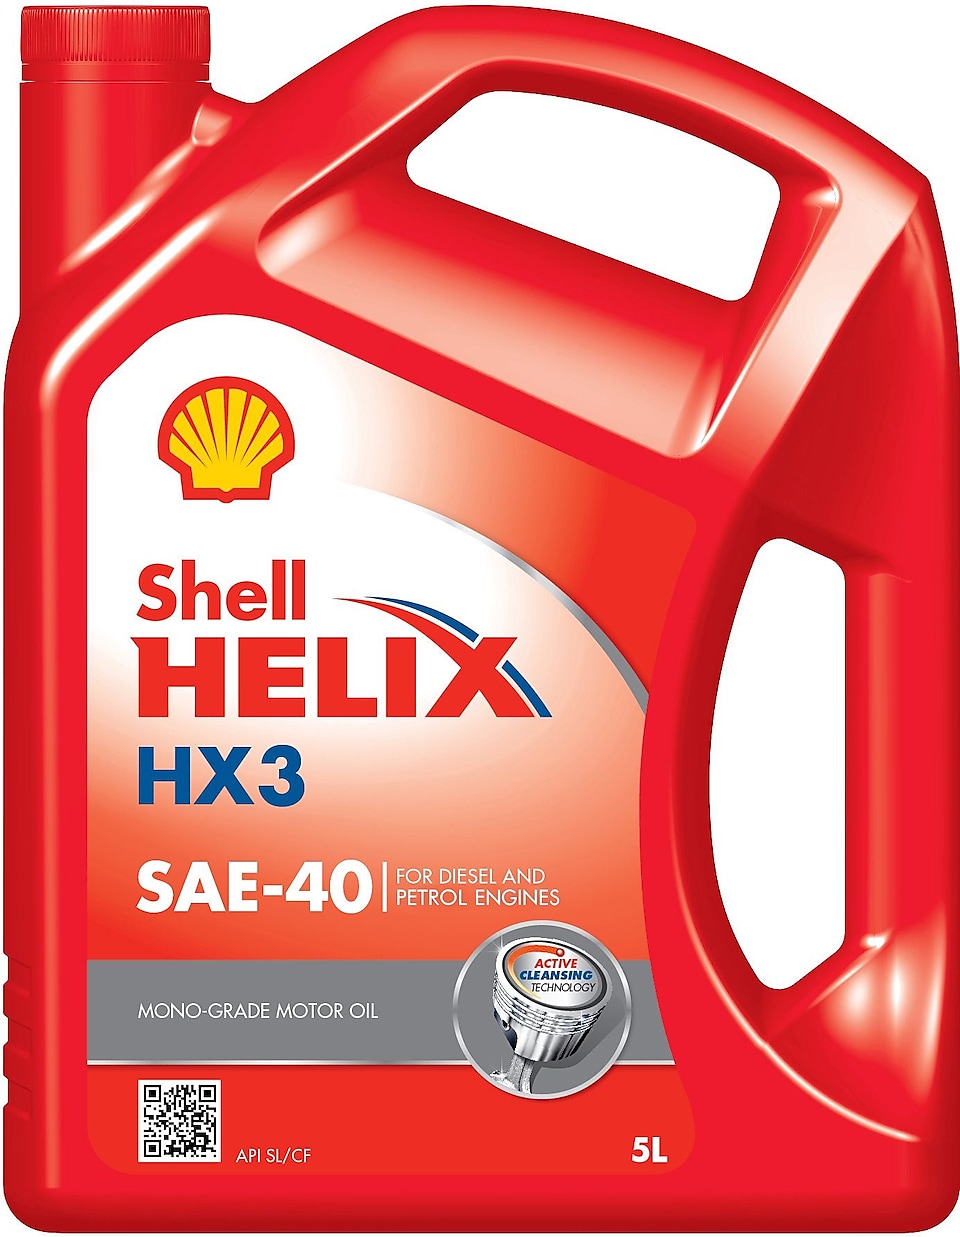 Packshot for Shell Helix HX3 SAE-40